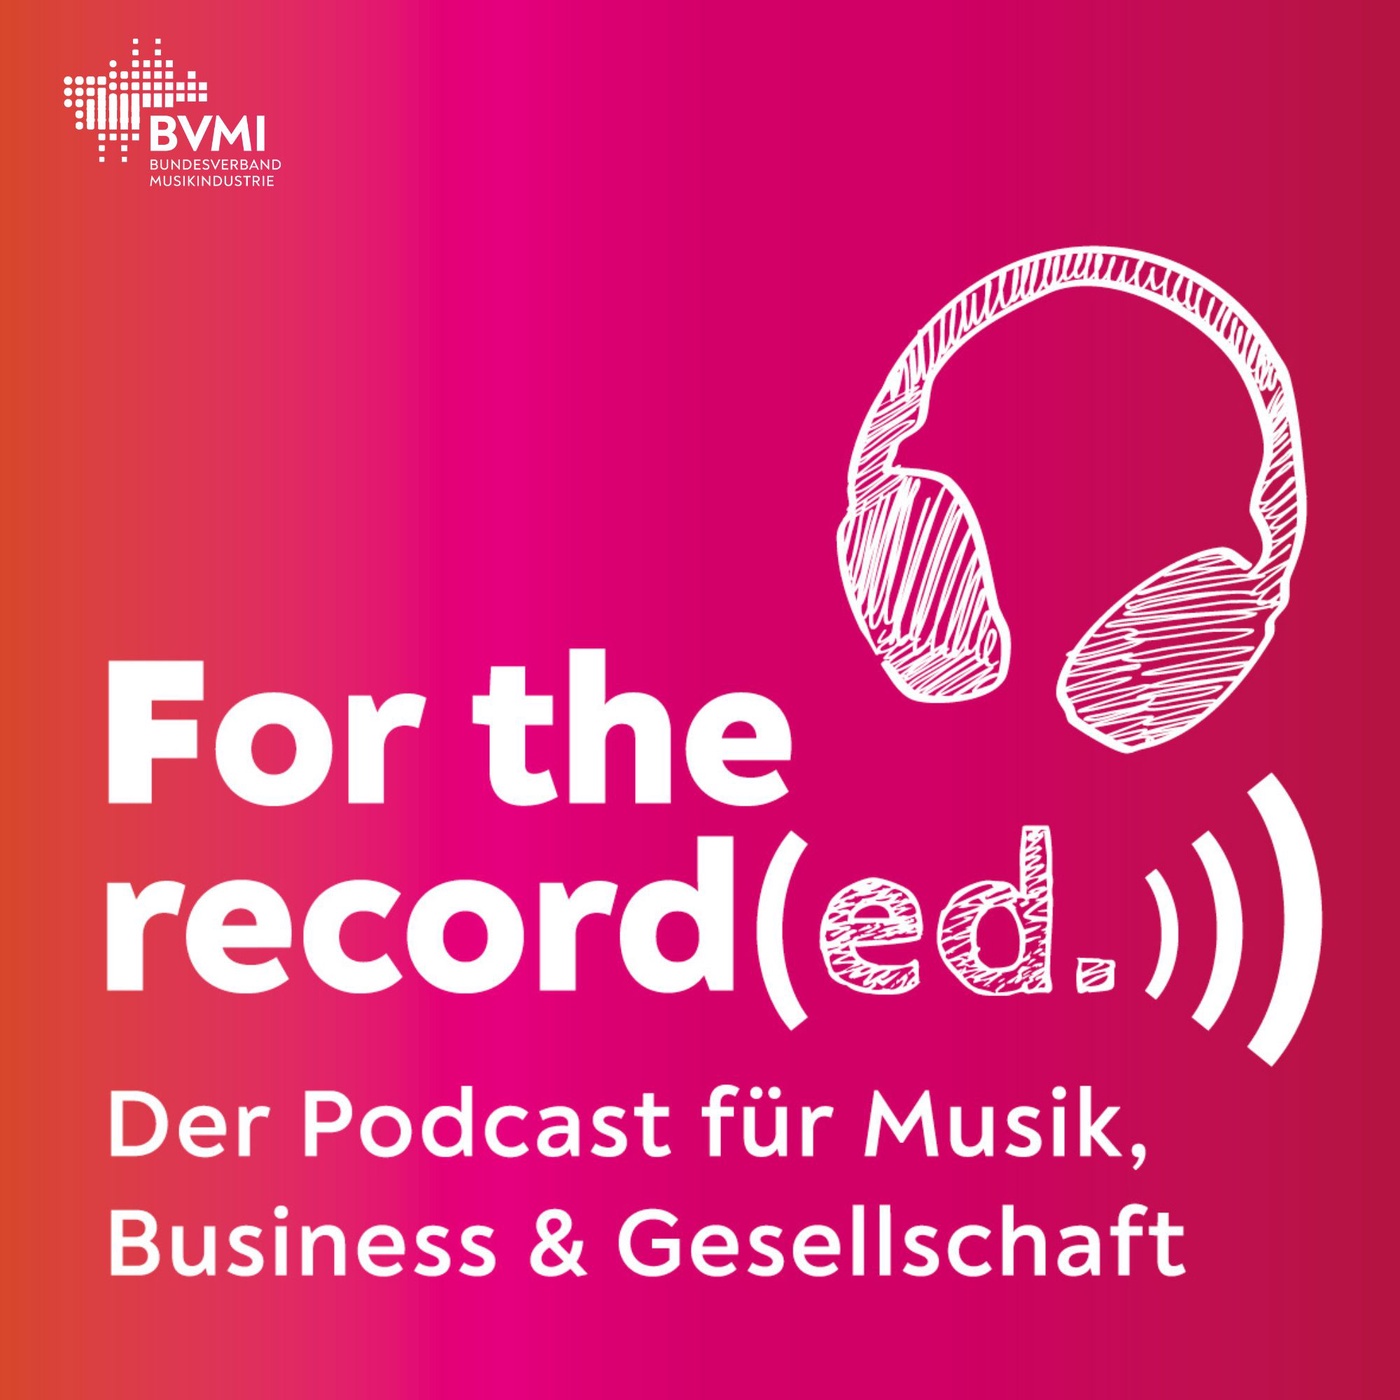 For the record(ed.) – Der Podcast für Musik, Business & Gesellschaft